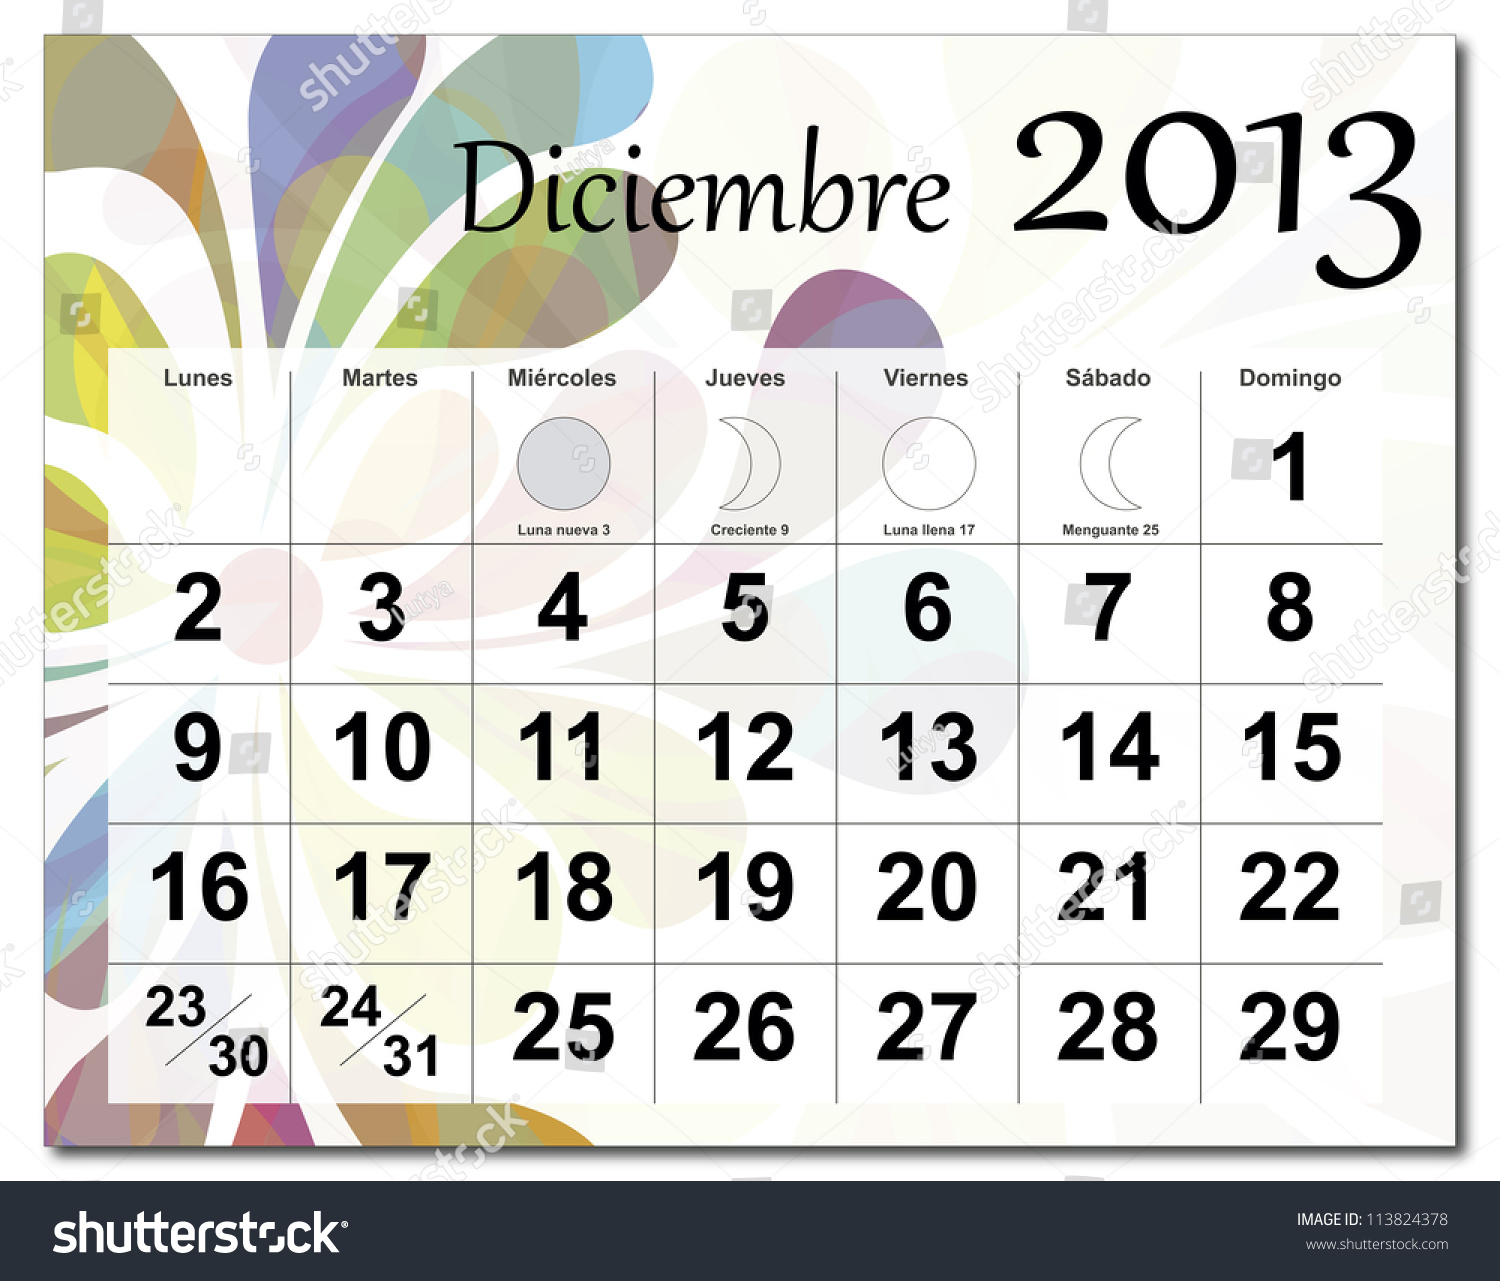 Spanish Version December 2013 Calendar Beautiful Stock Illustration 